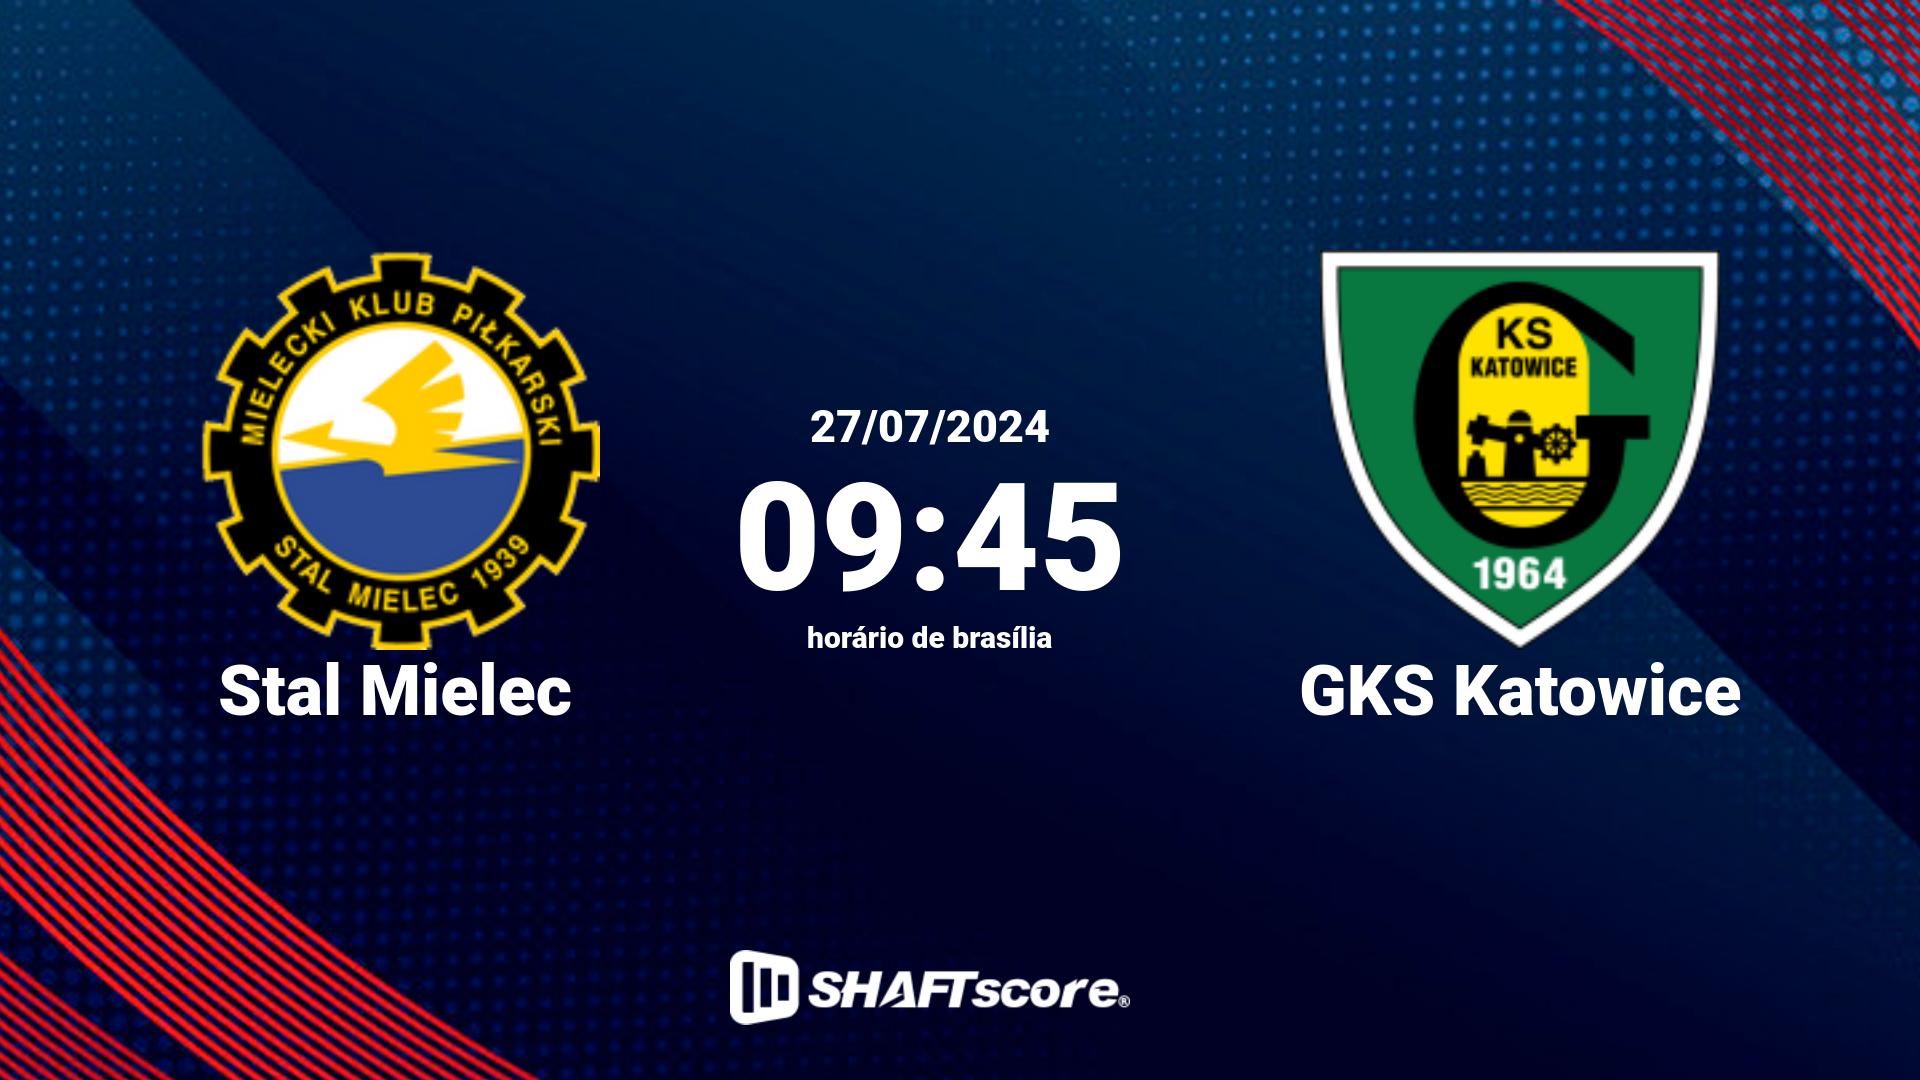 Estatísticas do jogo Stal Mielec vs GKS Katowice 27.07 09:45